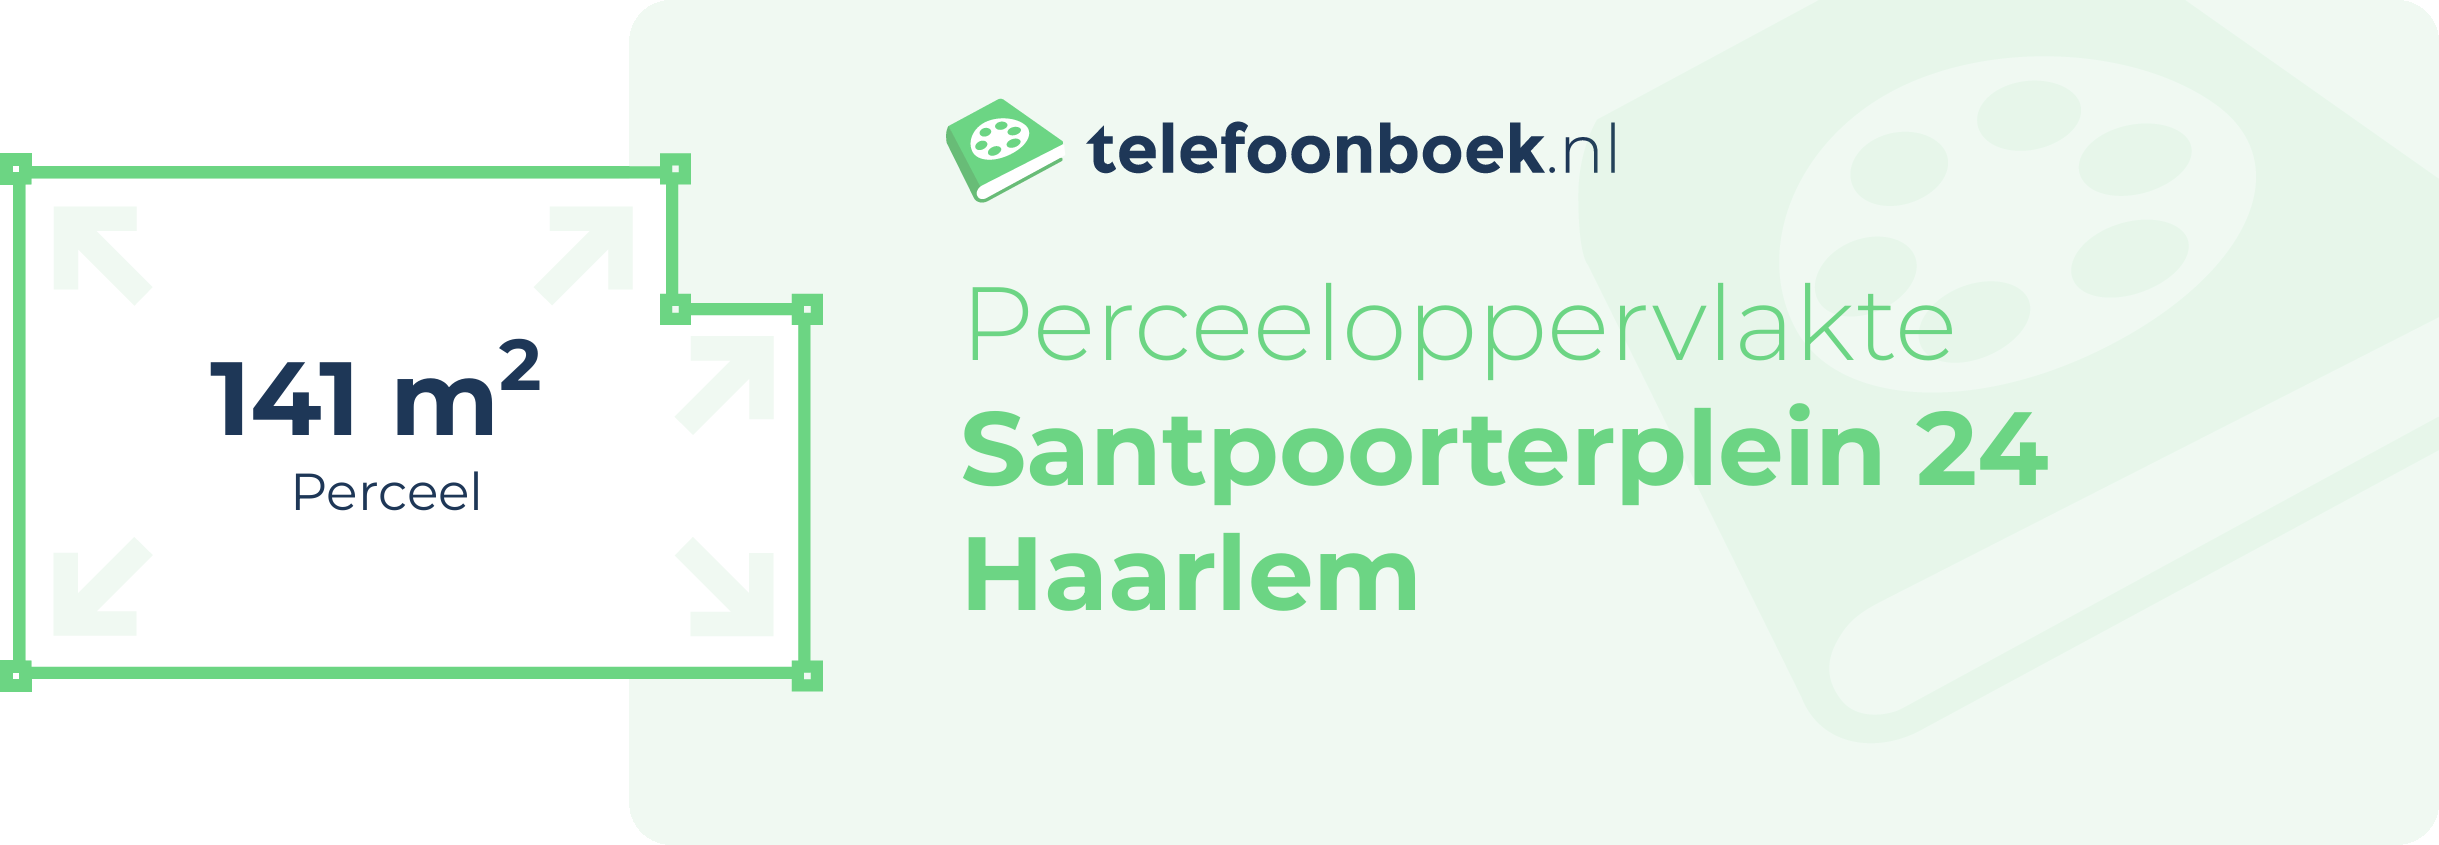 Perceeloppervlakte Santpoorterplein 24 Haarlem